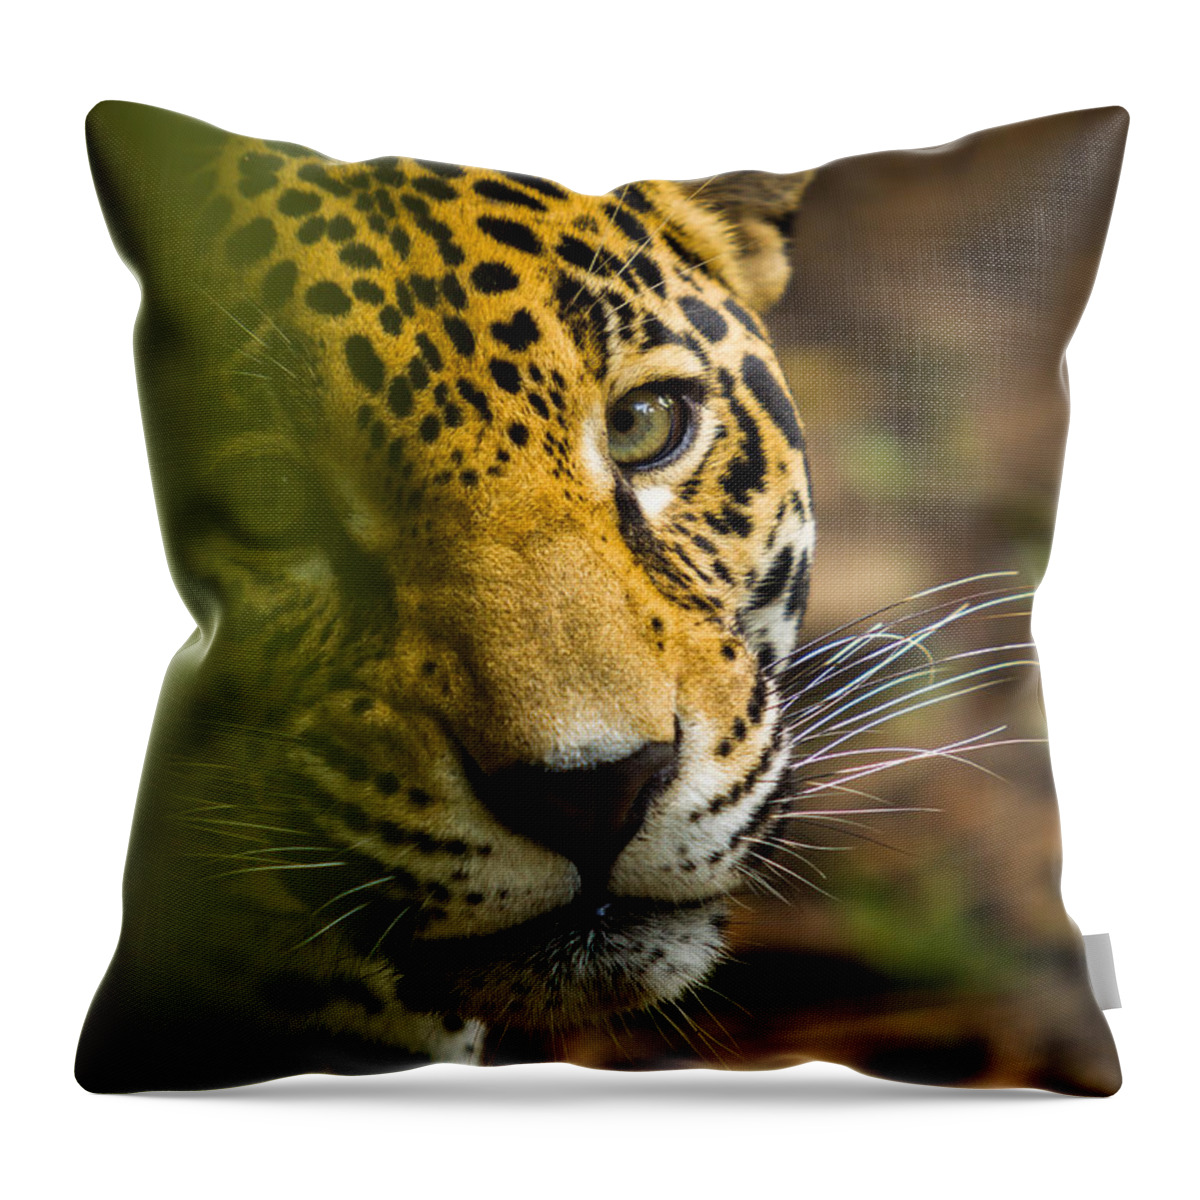 Jaguar Throw Pillow featuring the photograph Jaguar by Raul Rodriguez